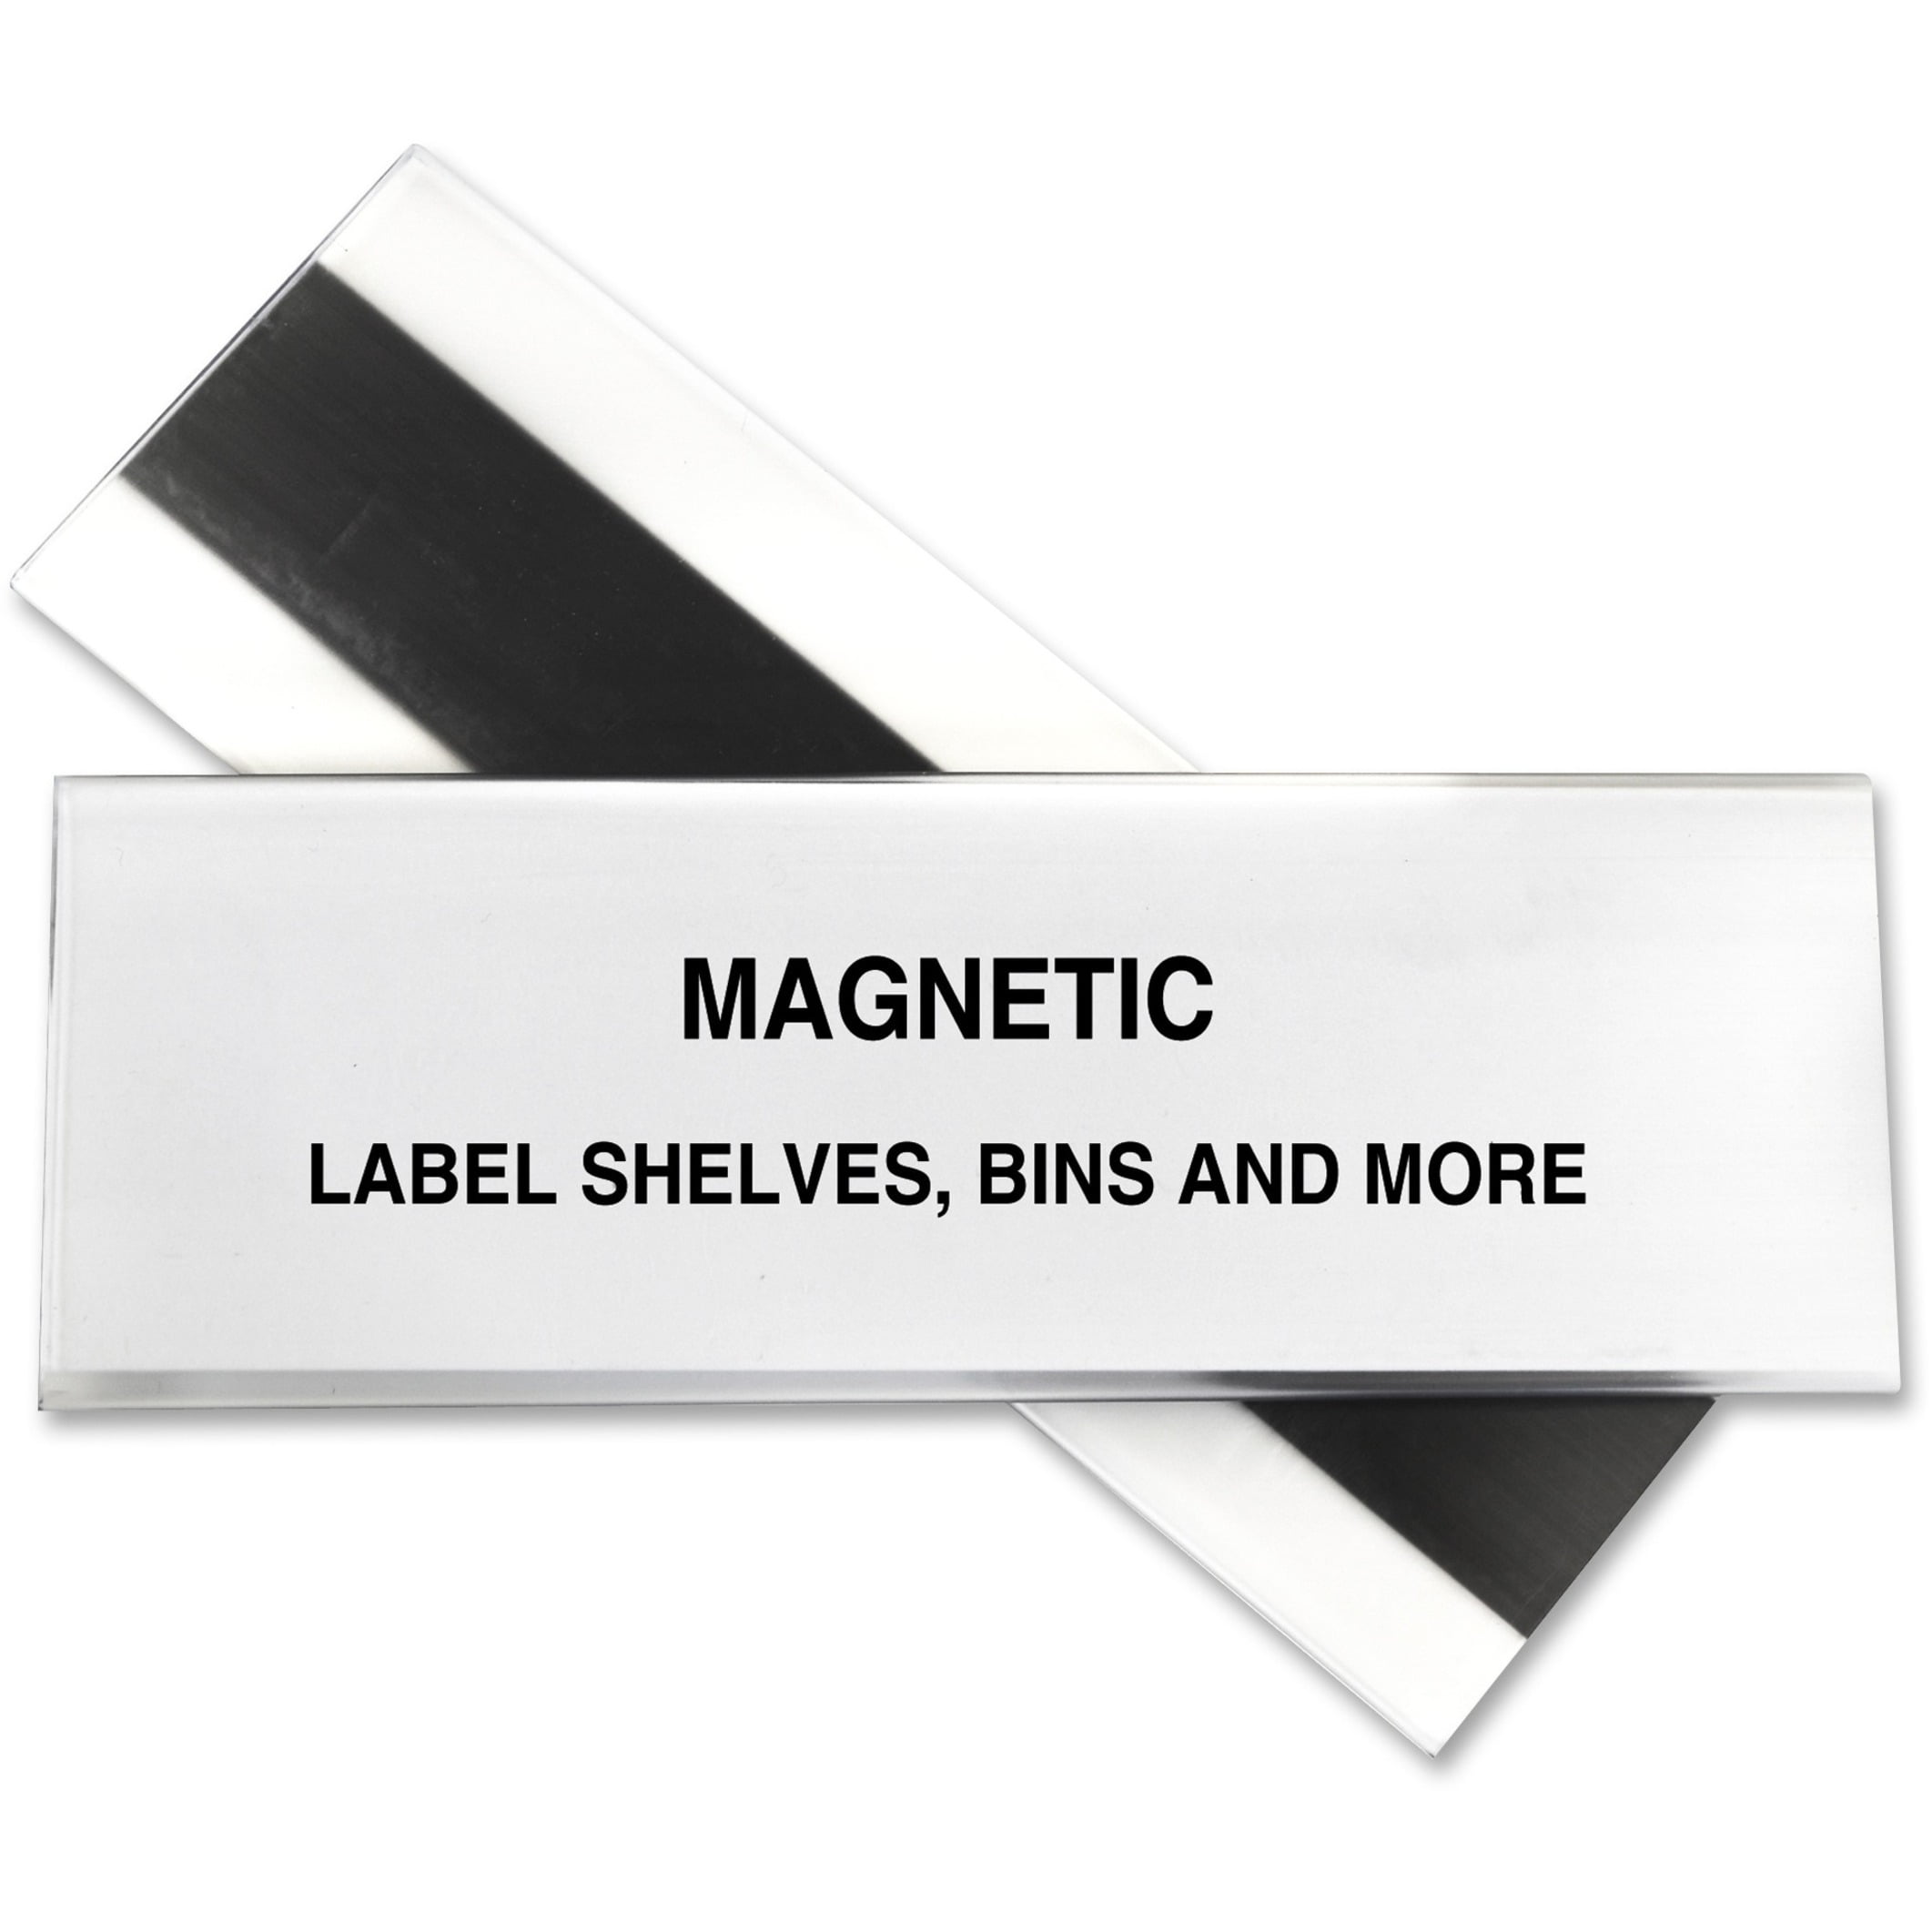 Seed storage box magnetic flap